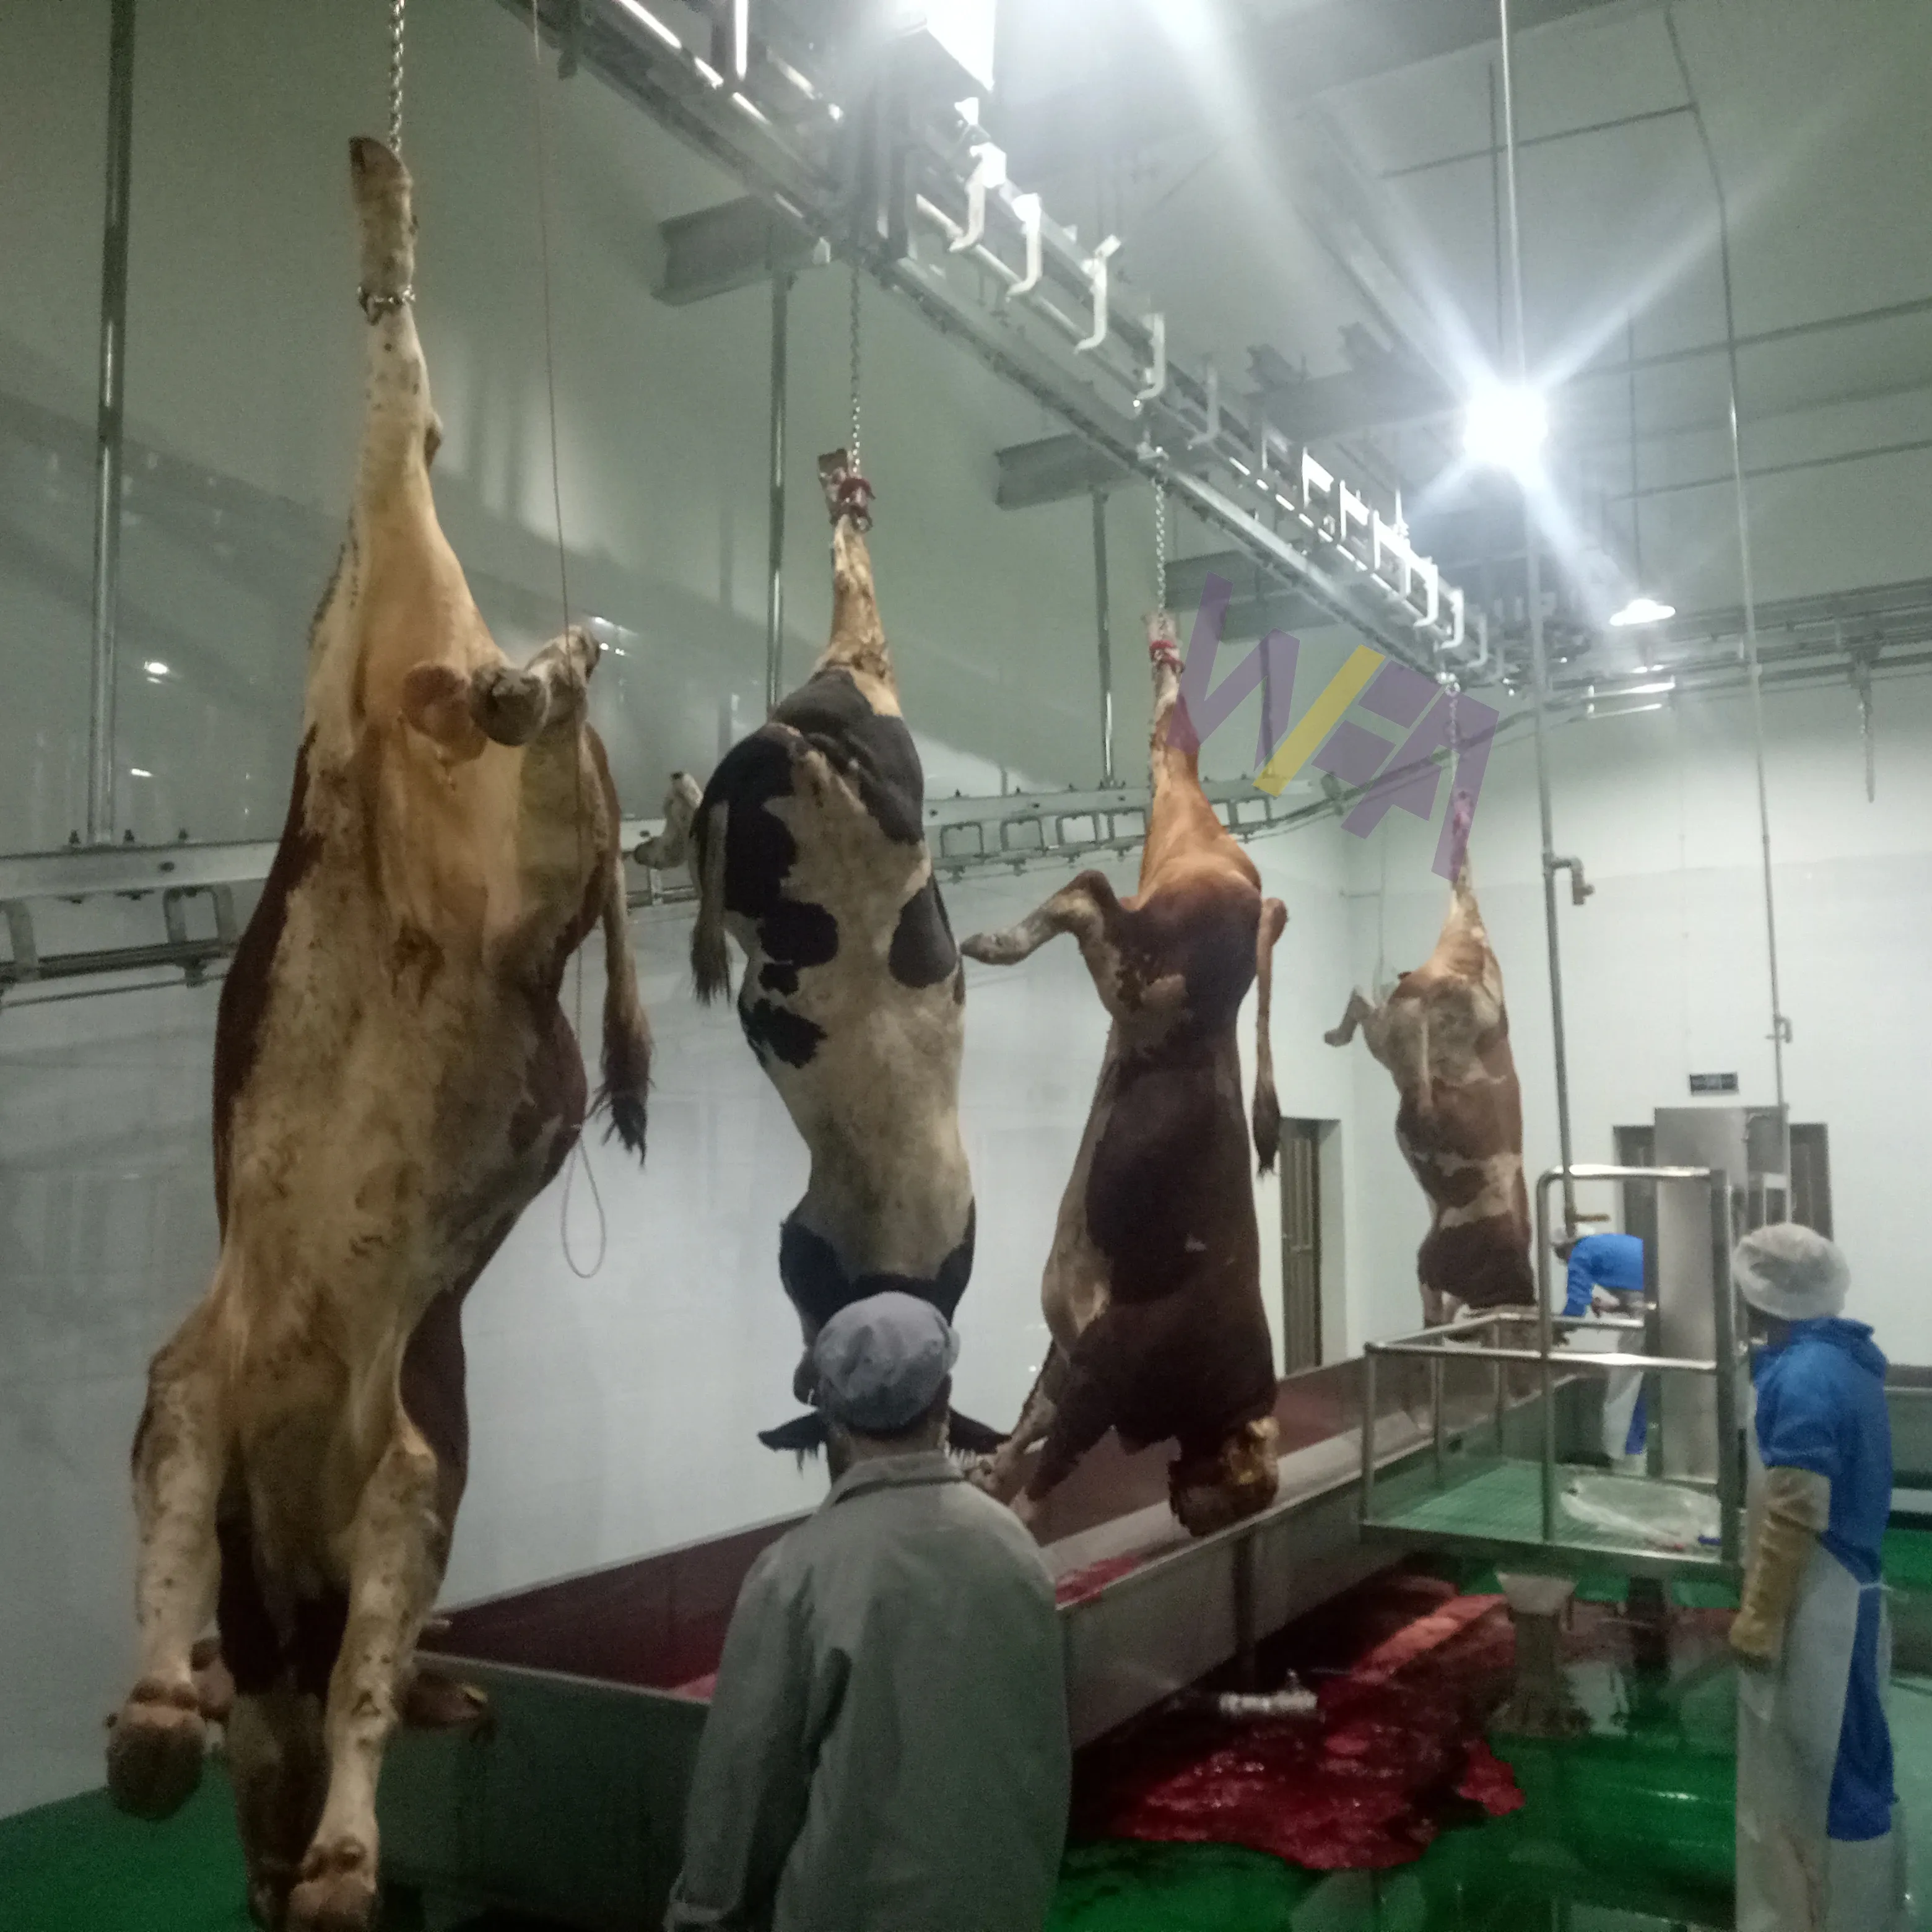 Máquina de processamento de carne muçulmana Halal para matadouro turnkey, equipamento para matadouro de vacas, 50 vacas por hora